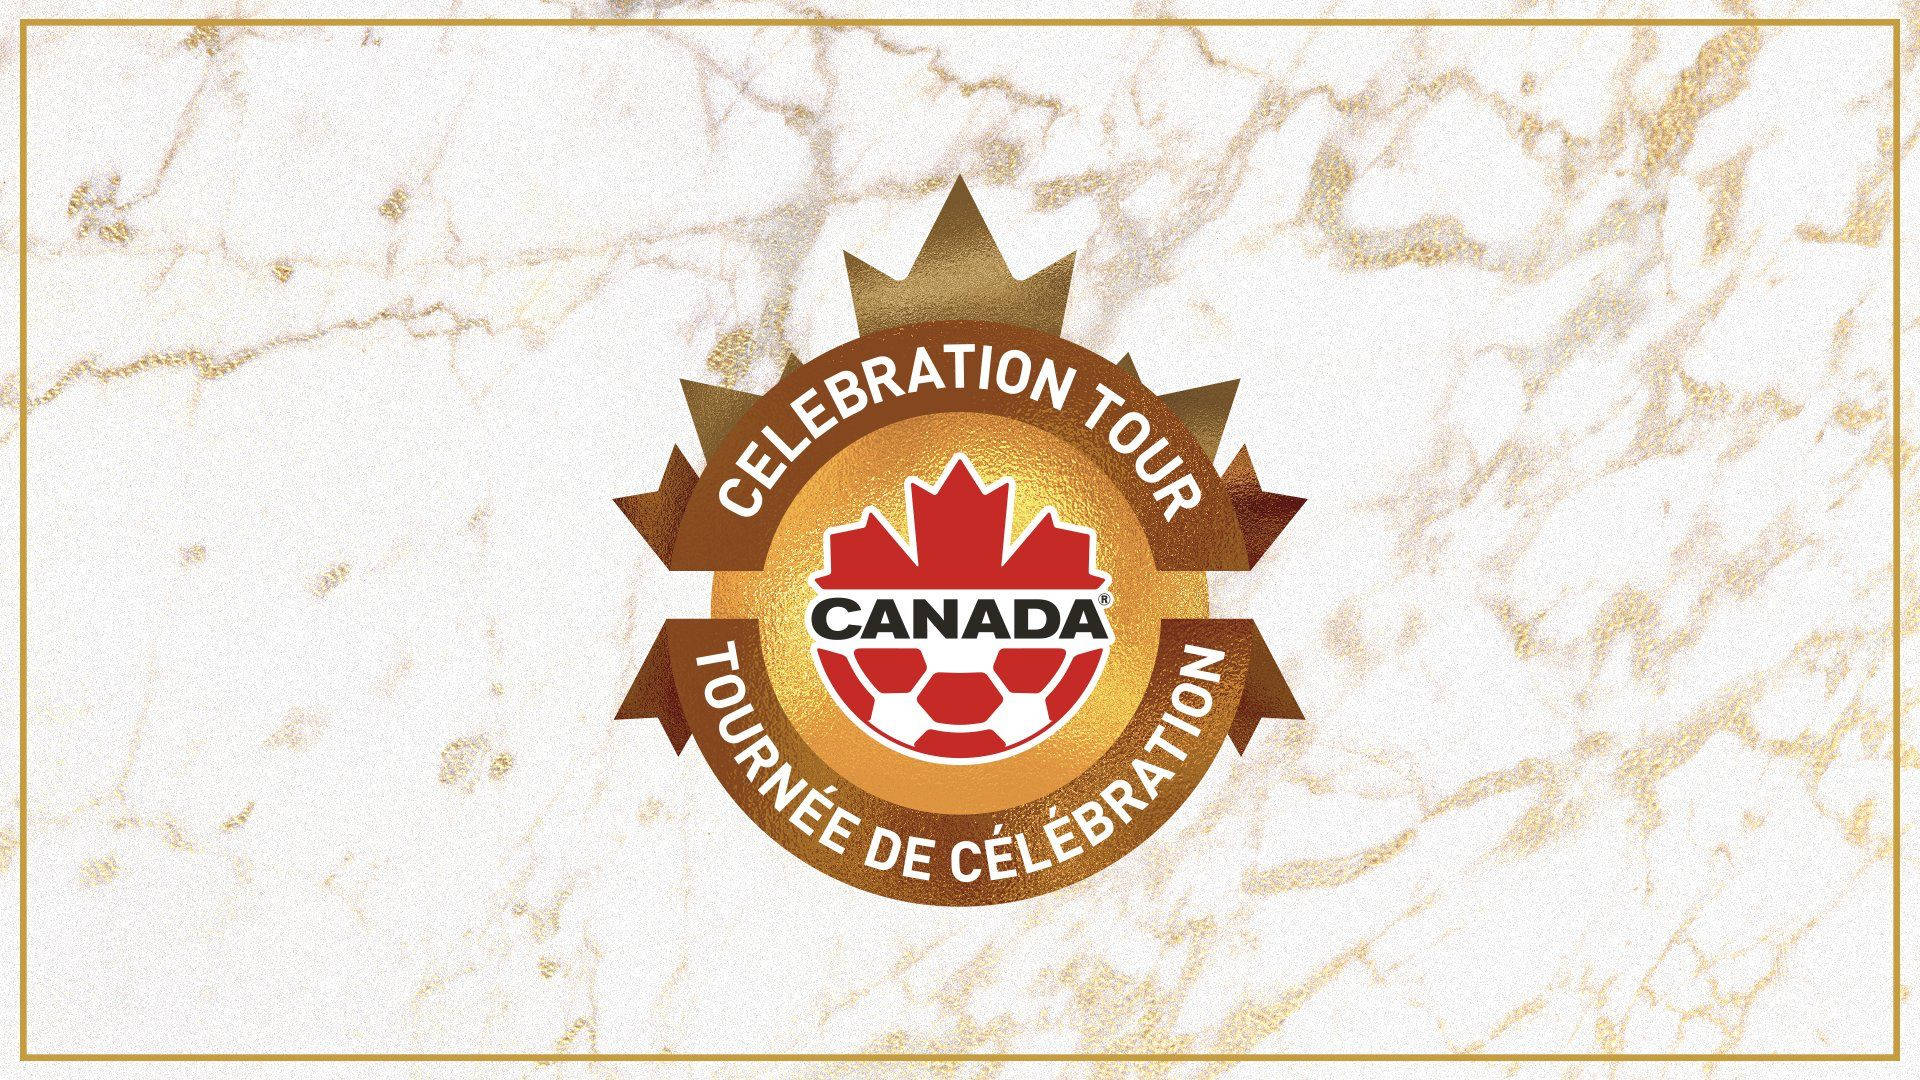 Canadas Fodboldlandshold Celebration Tour Wallpaper